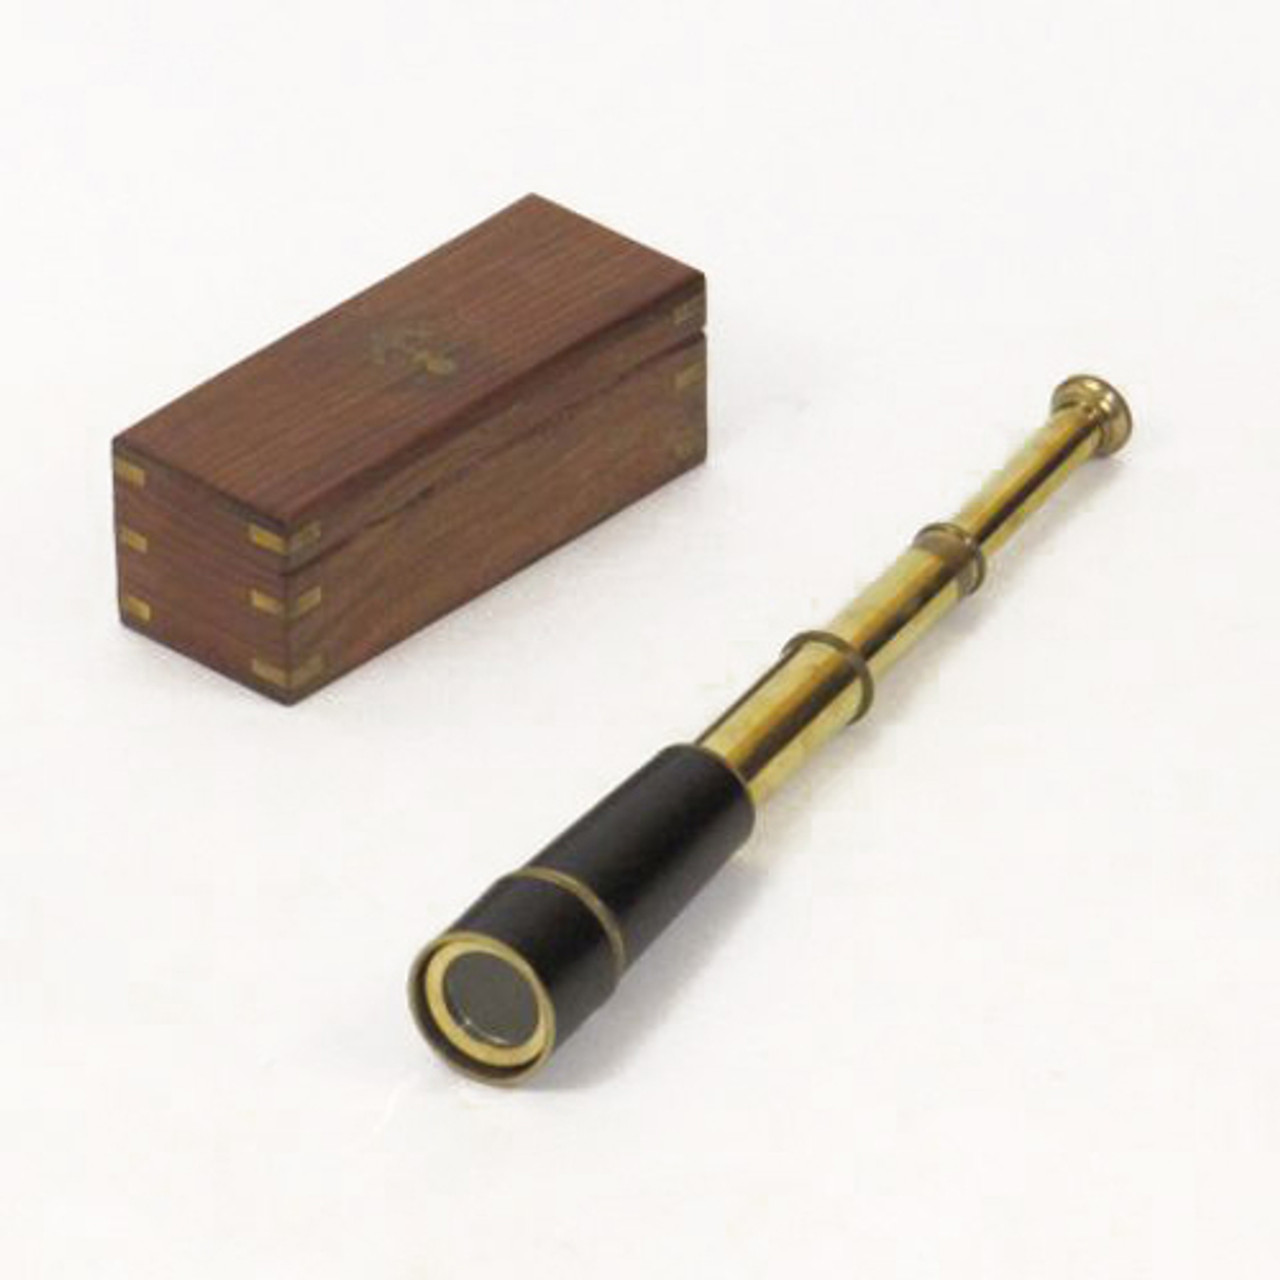 Brass Pirate Spyglass w/ Wooden Case Handheld Telescope 